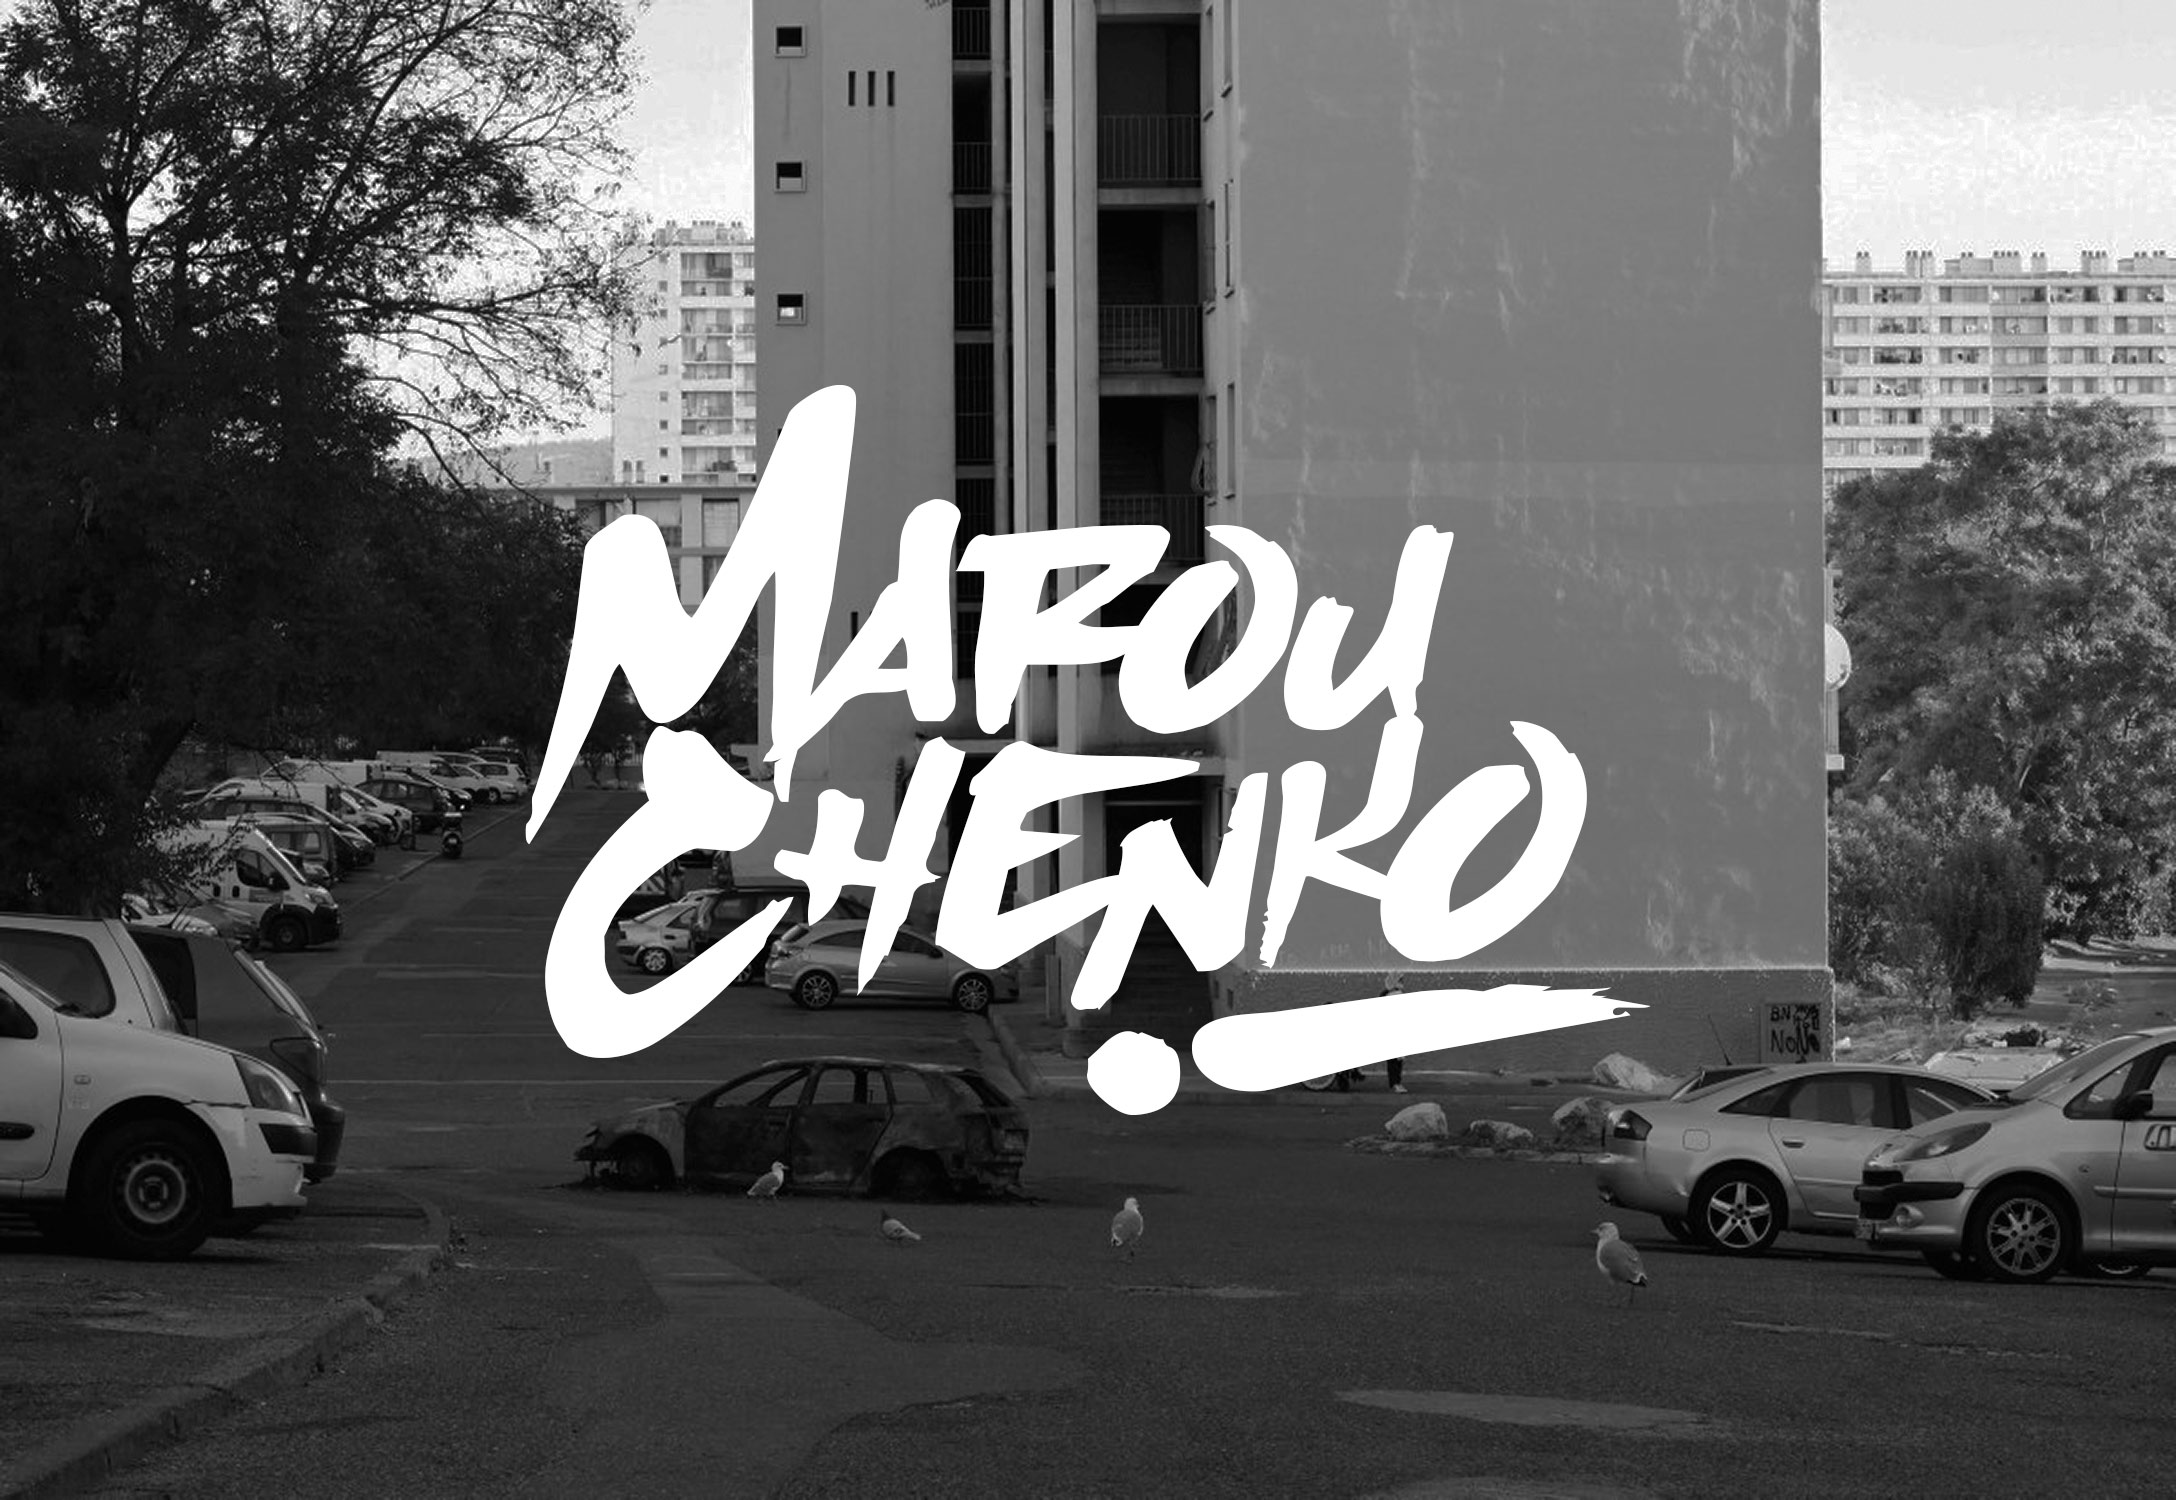 Marou_chenko